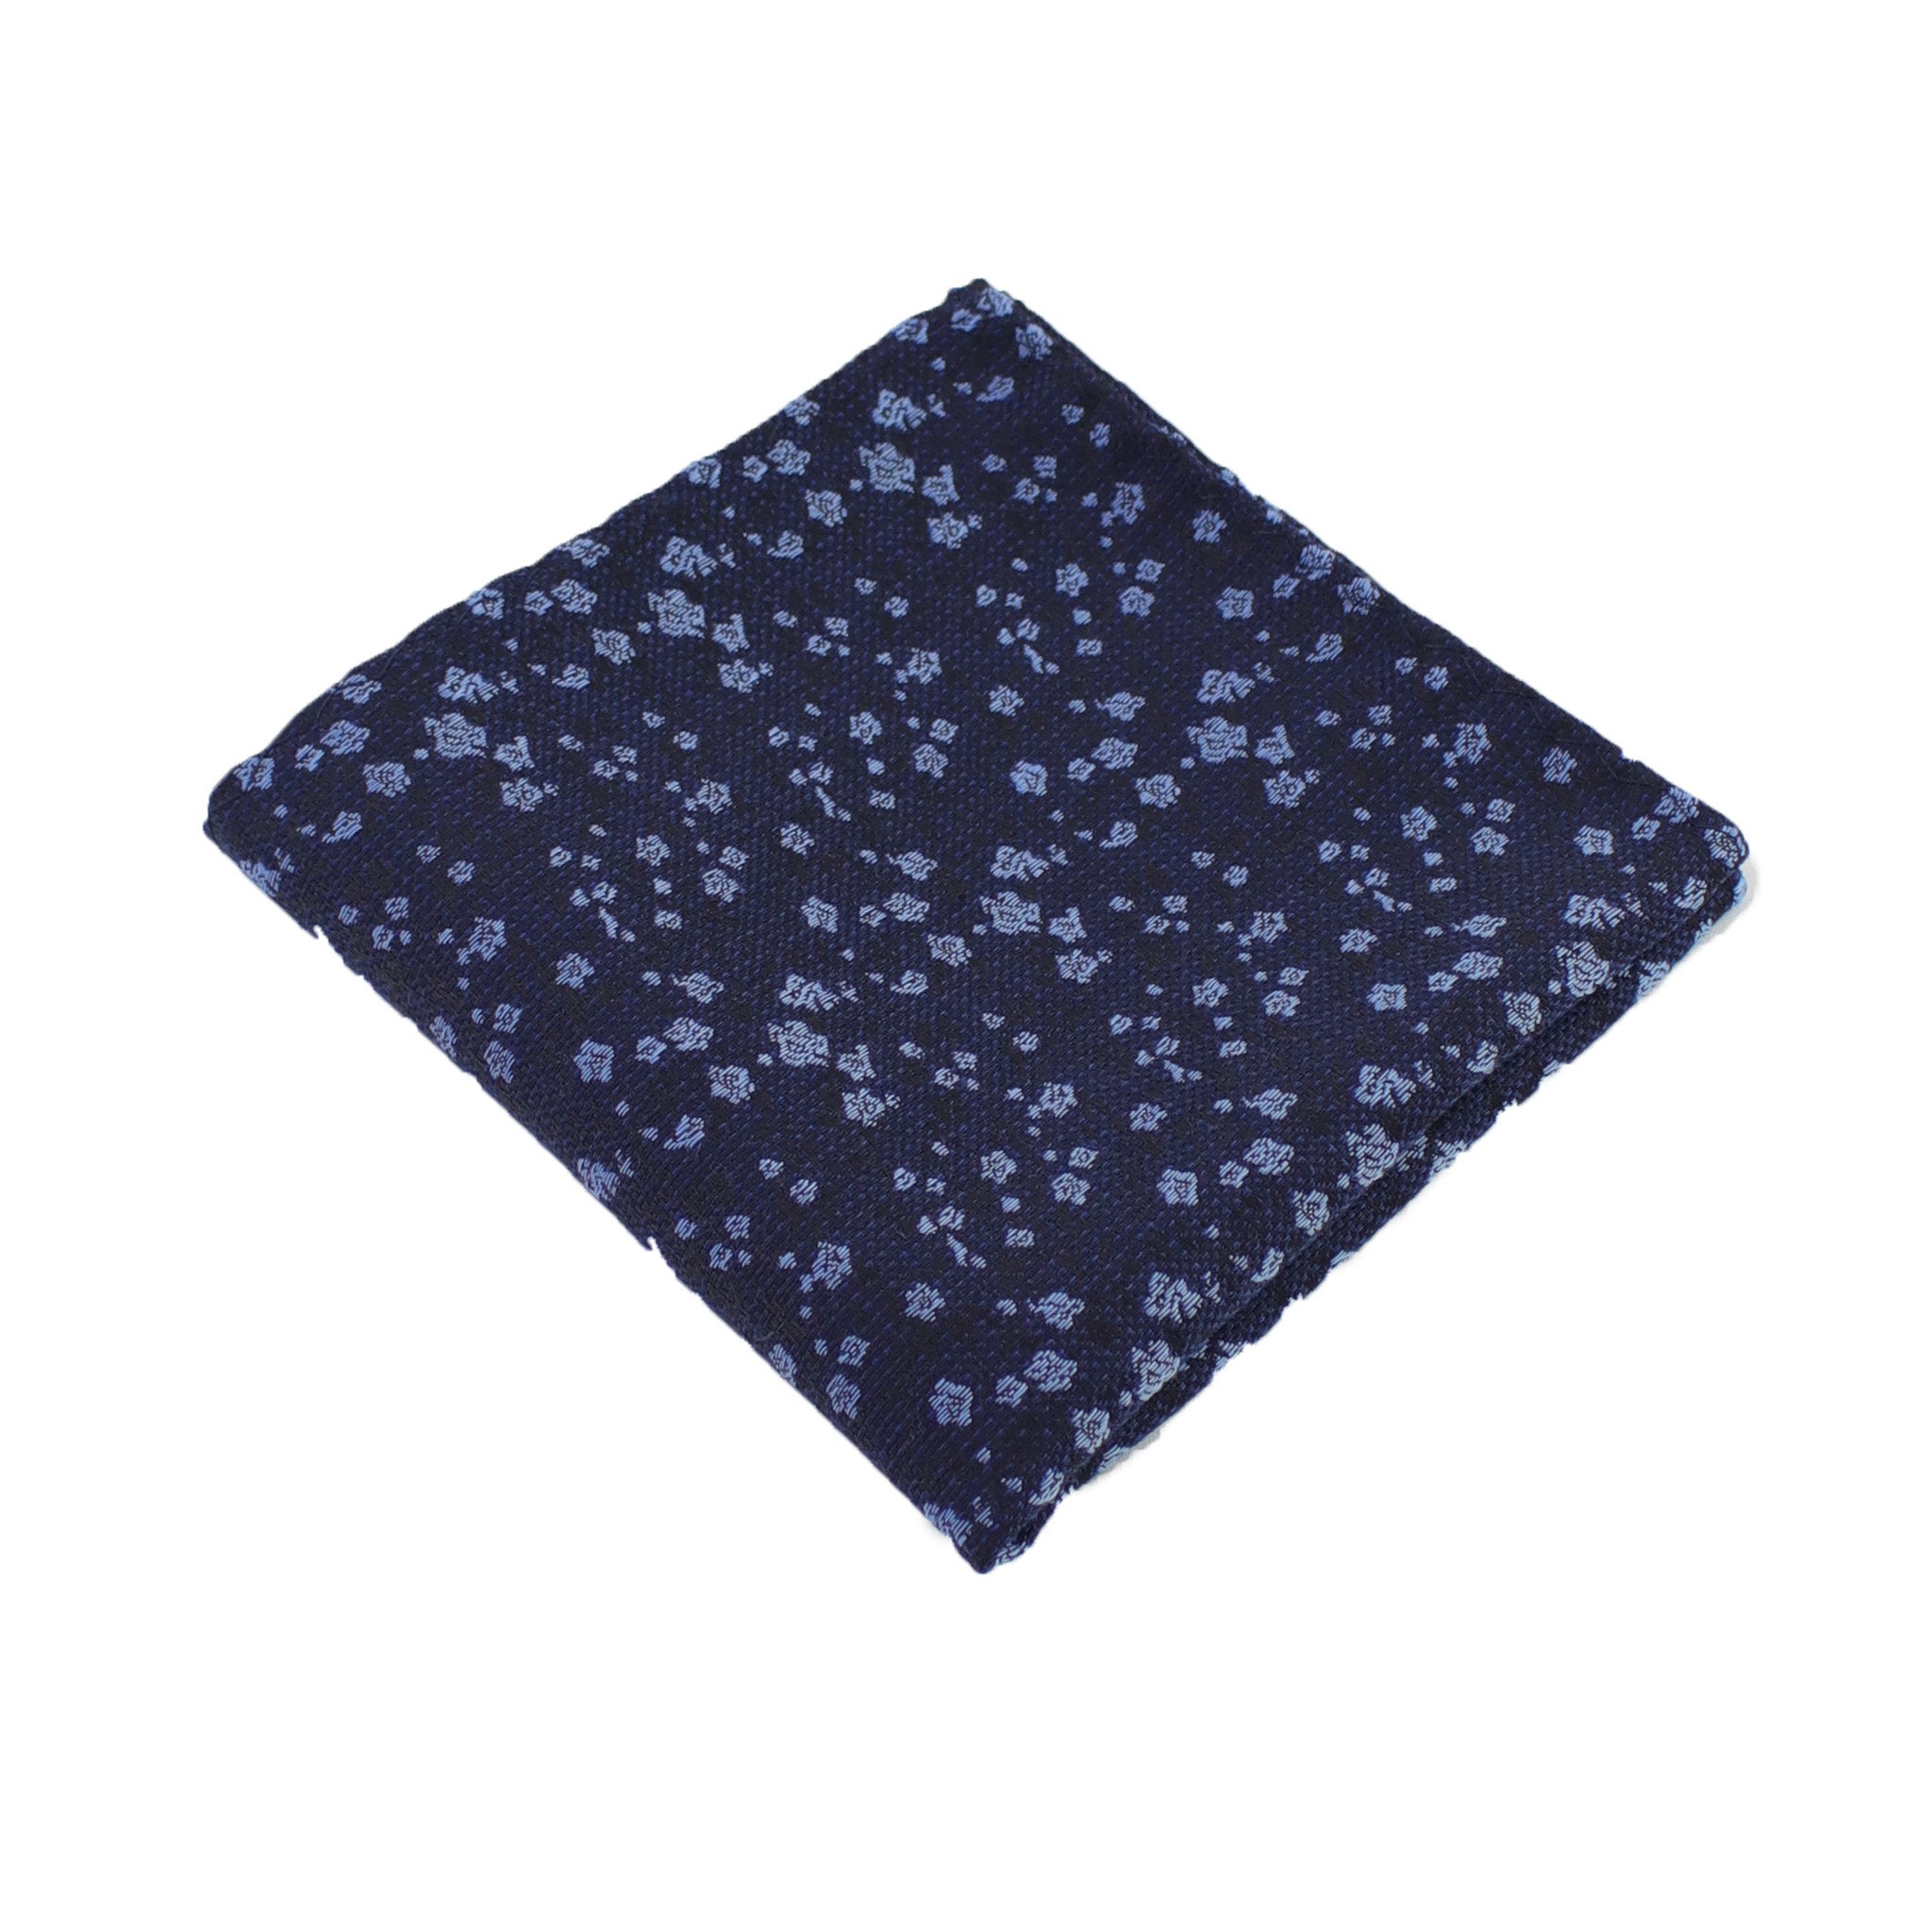 Navy & Light Blue Floral Pocket Square from DIBI